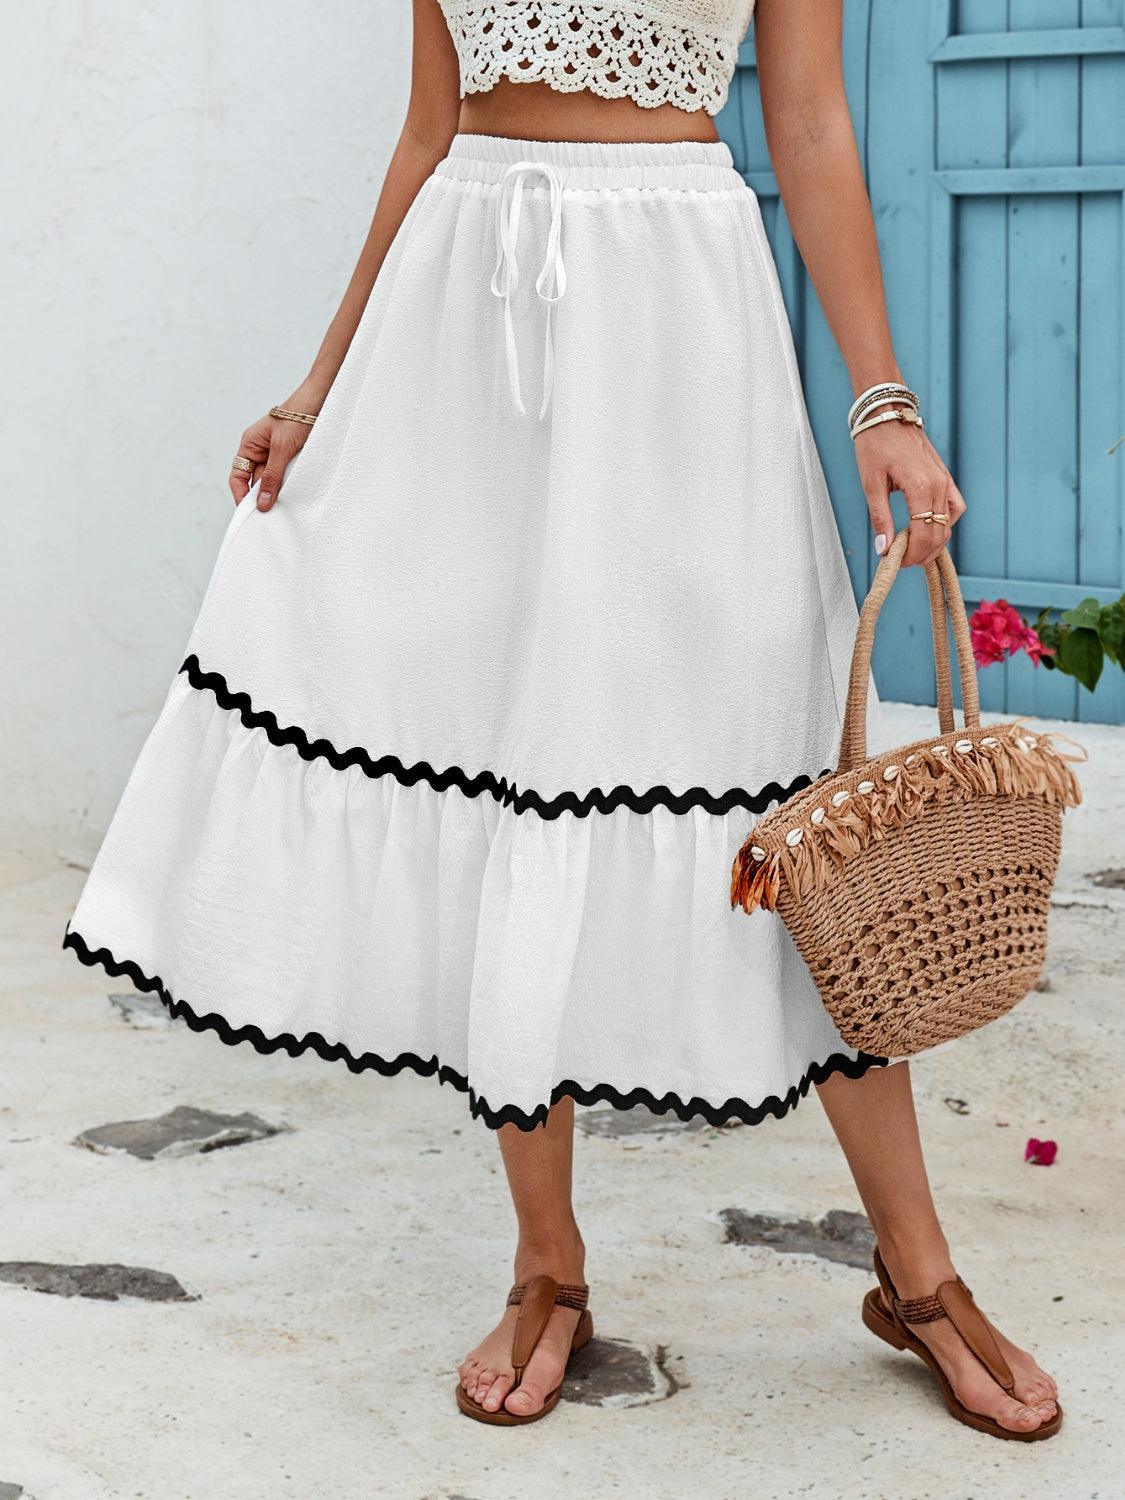 a woman in a white dress holding a wicker basket